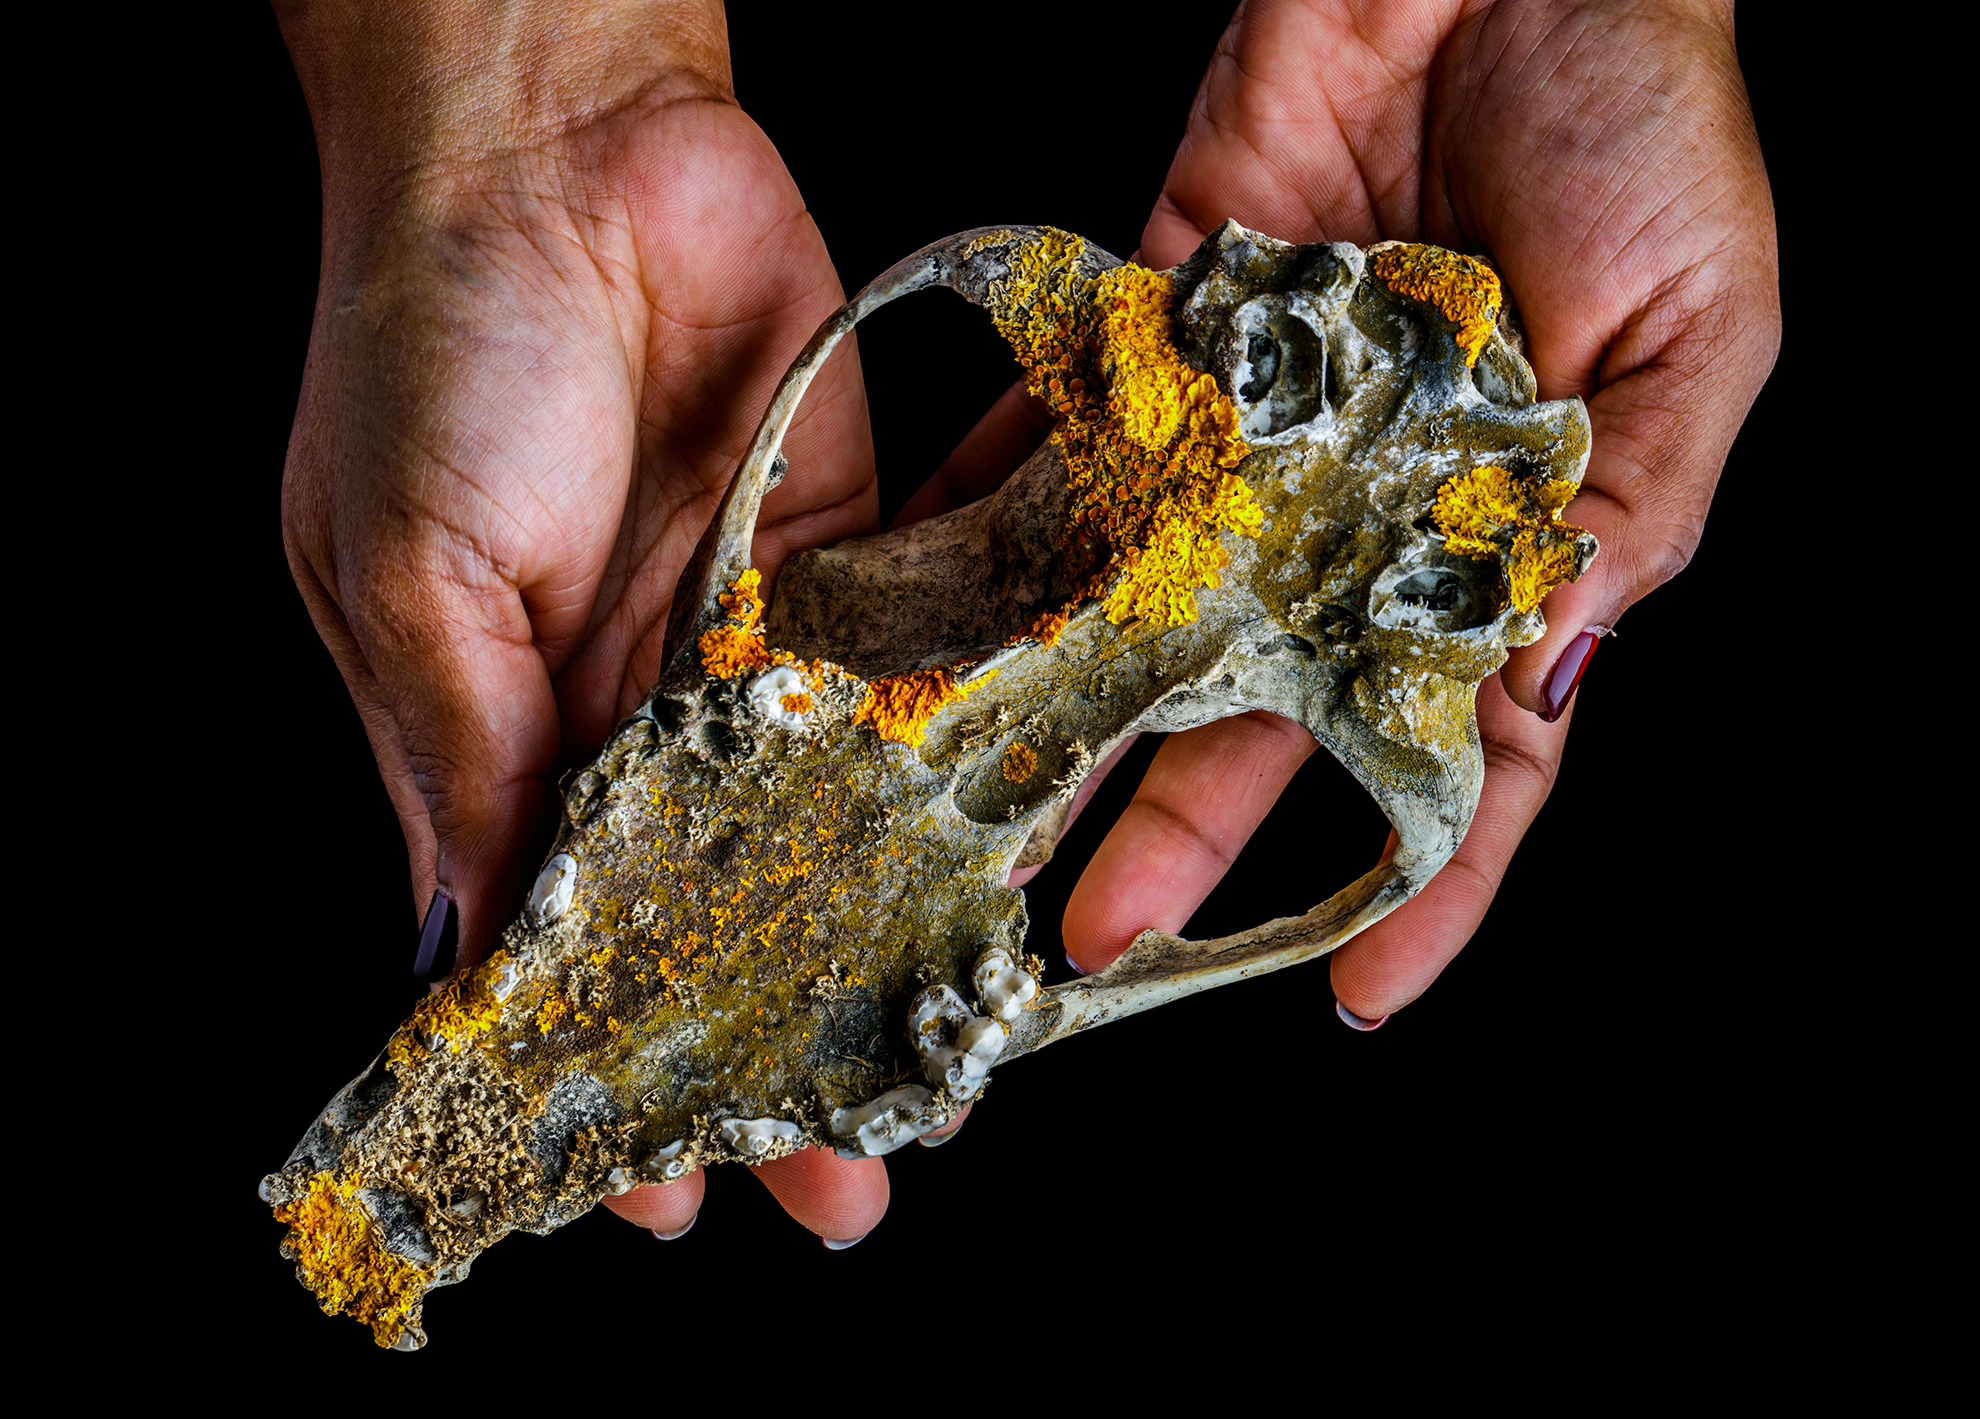 Macro image of a long animal skull with yellow moss-like plants growing around the thin bones